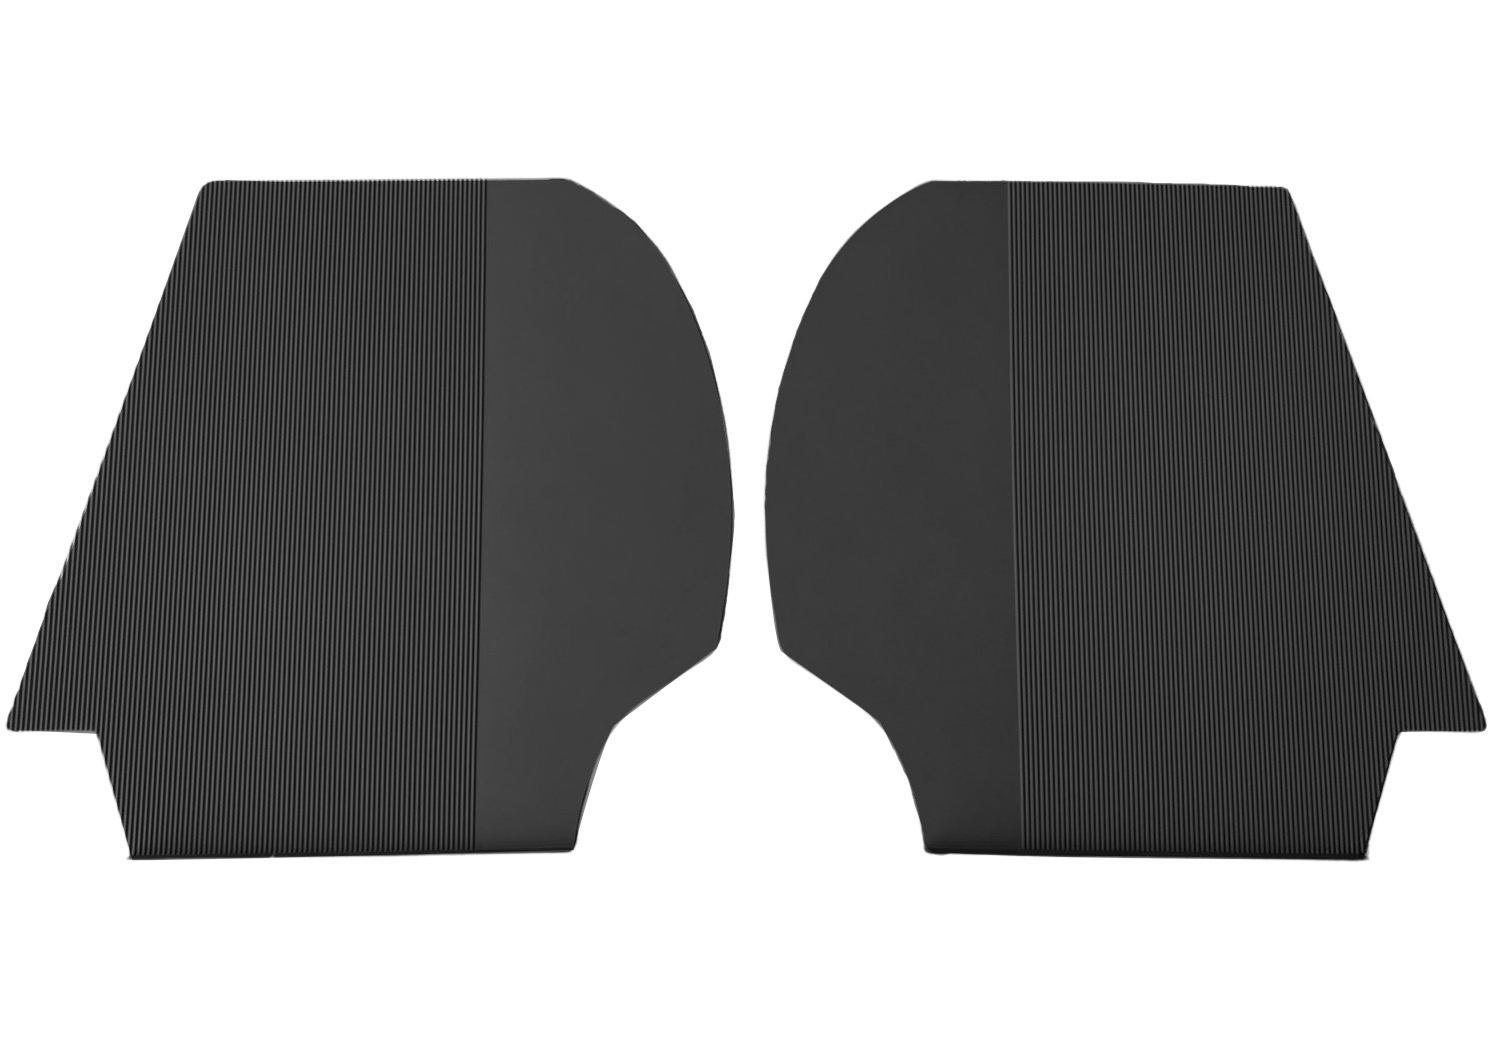 Rubber floor mats for inner wheel arch inside the car for Saab 92, 93, 95 & 96 .  Color black.